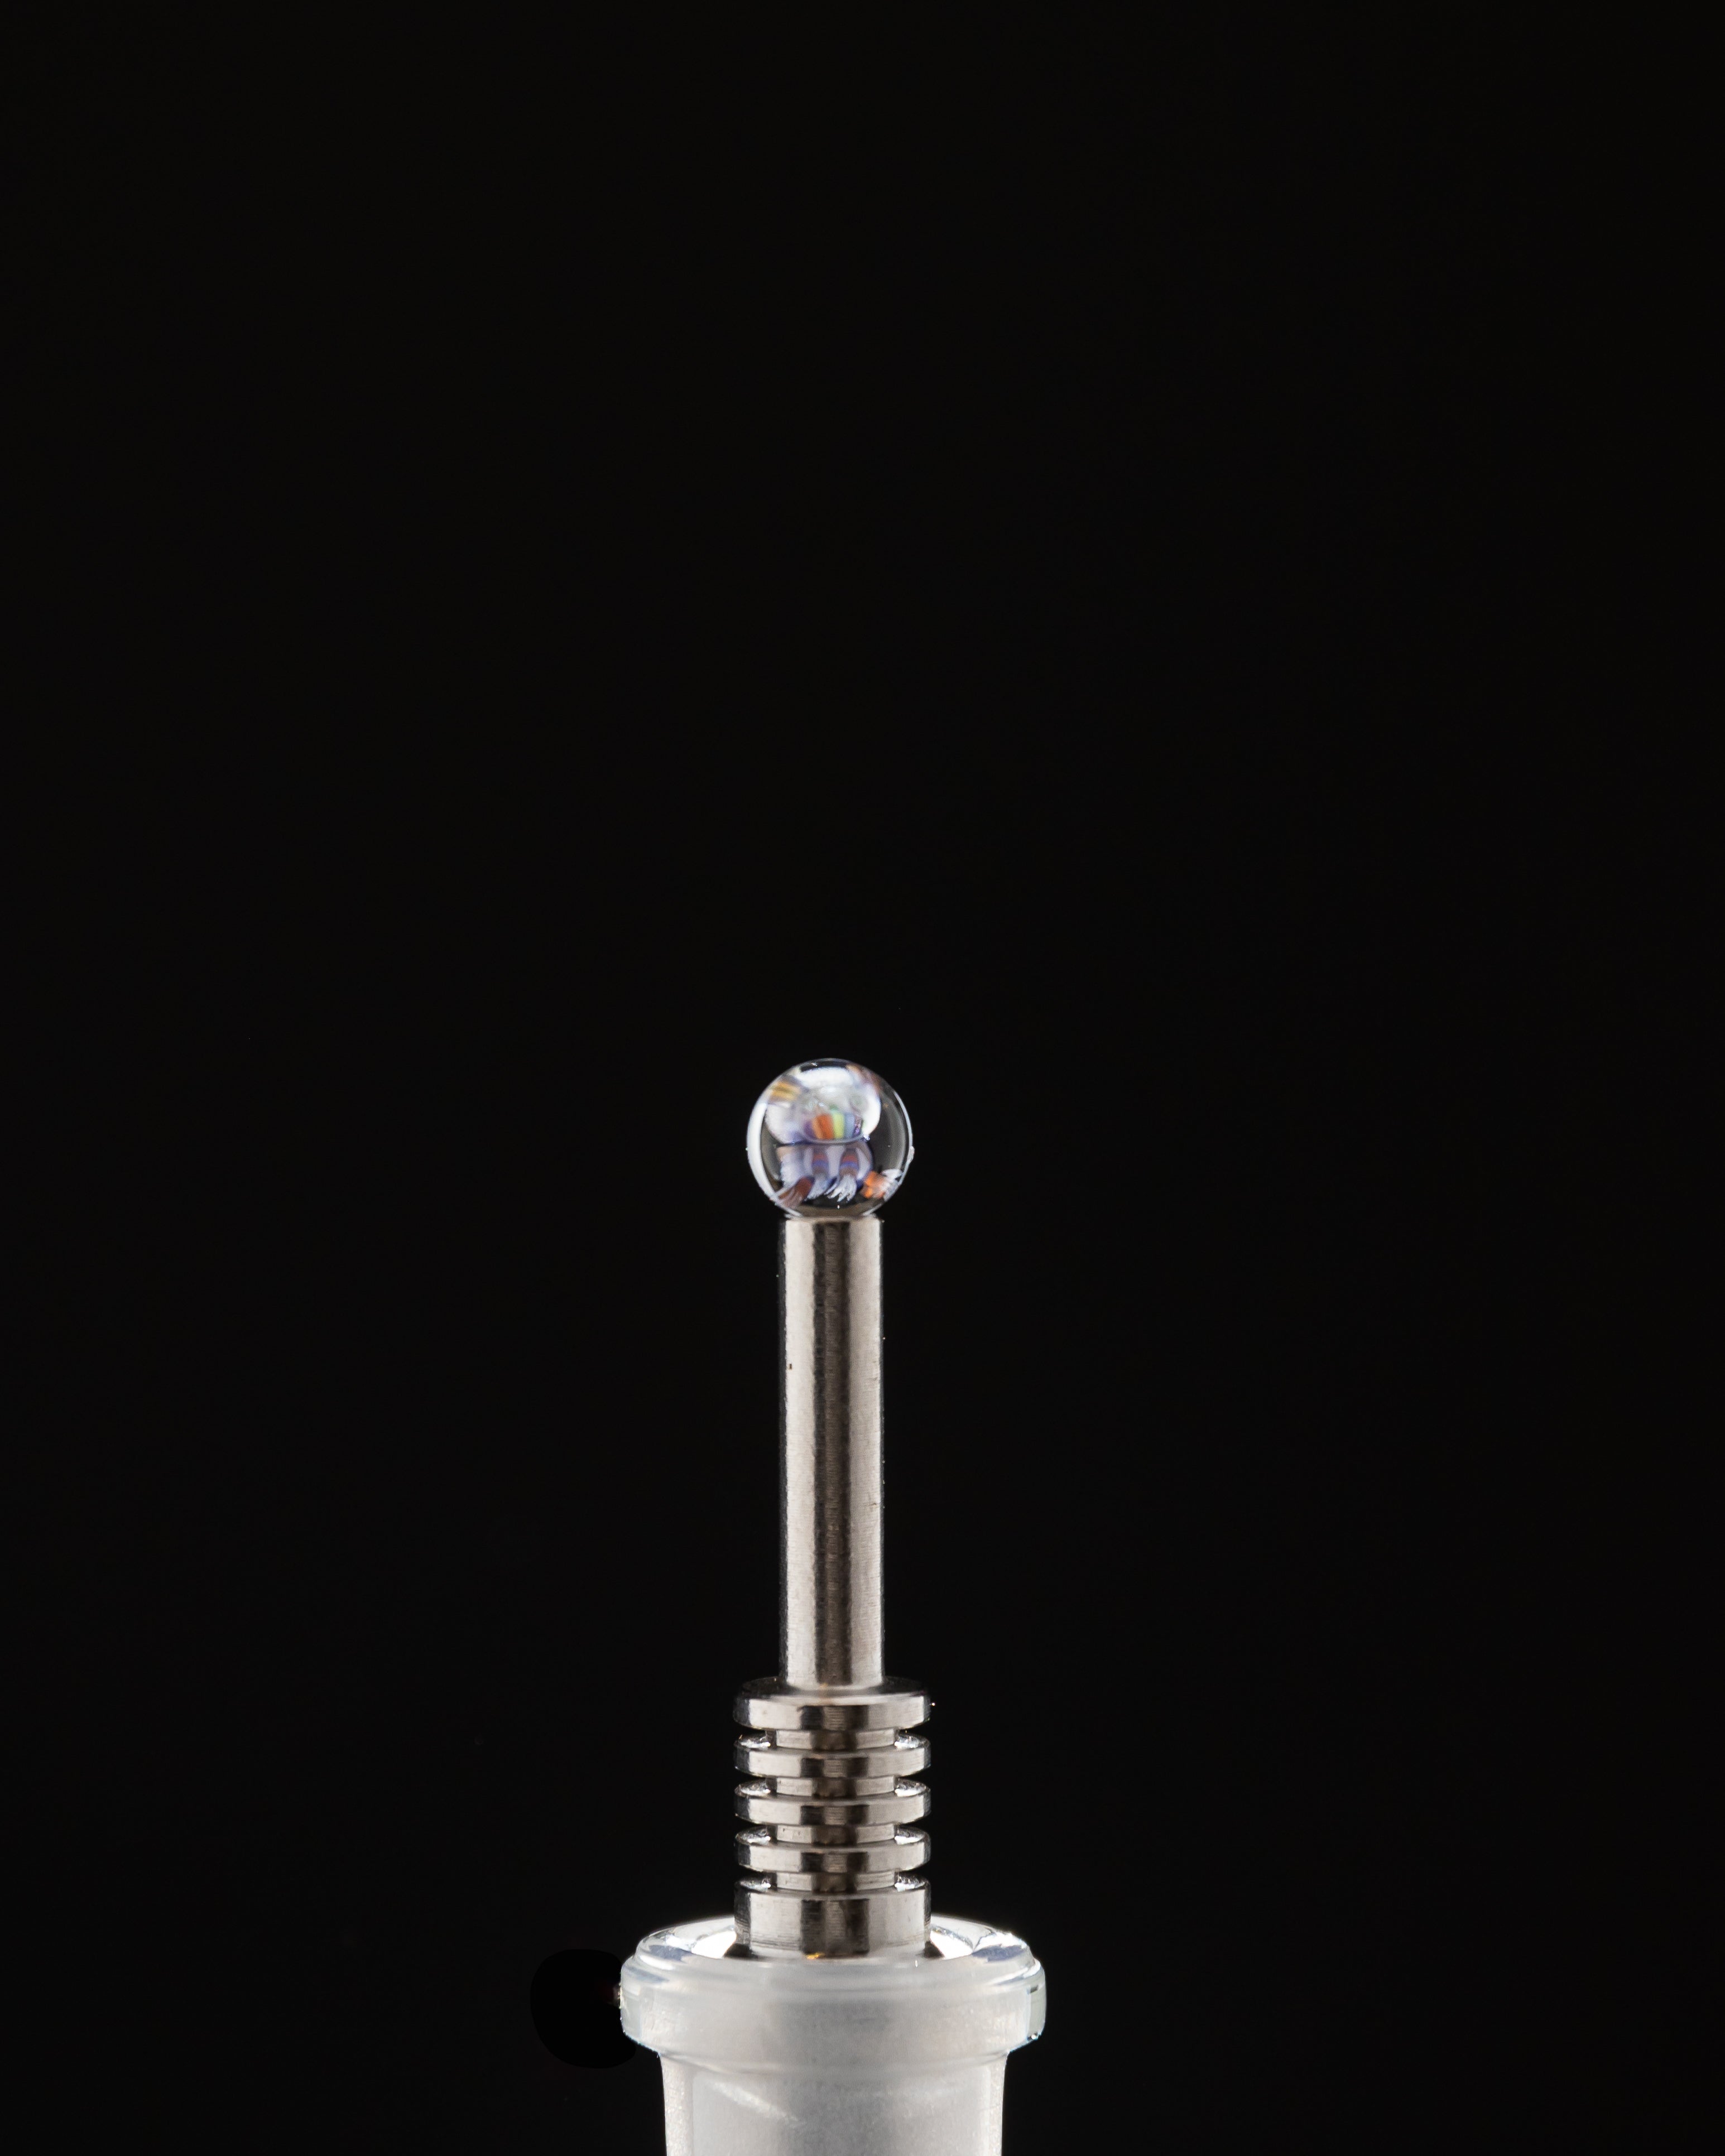 Steve Hulsebos Glass - Milli Terp Pearl 6mm (Rainbow Robot)